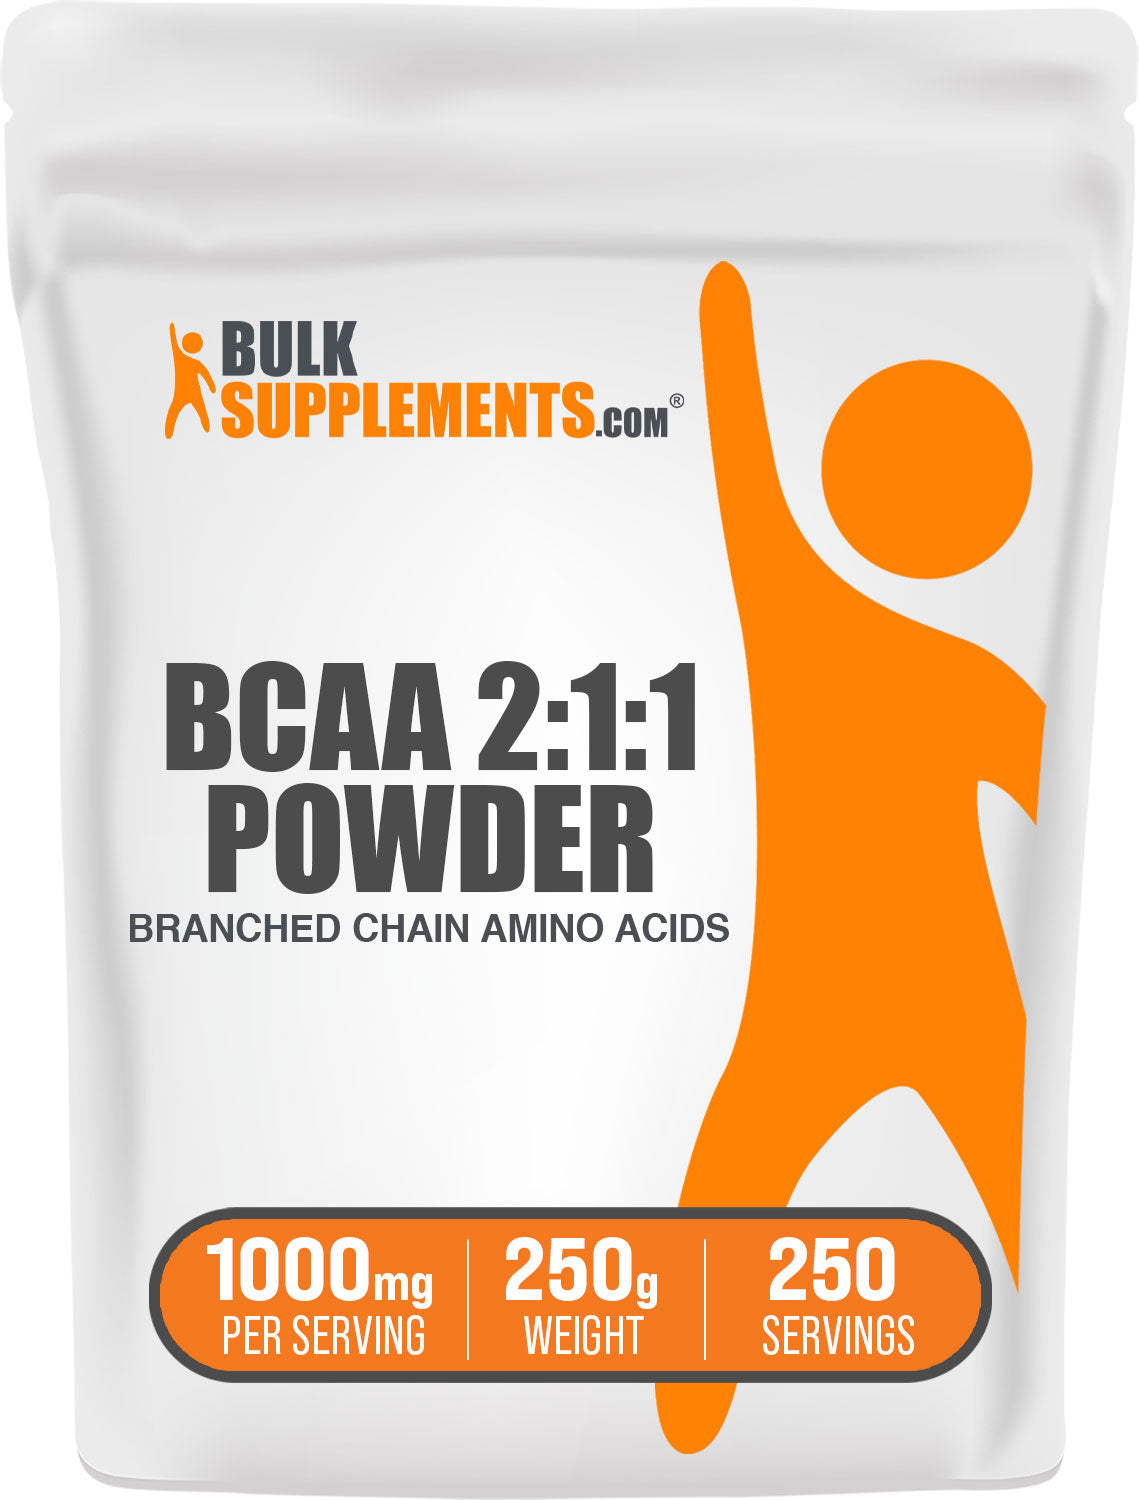 BCAA 2:1:1 Powder 250g bag